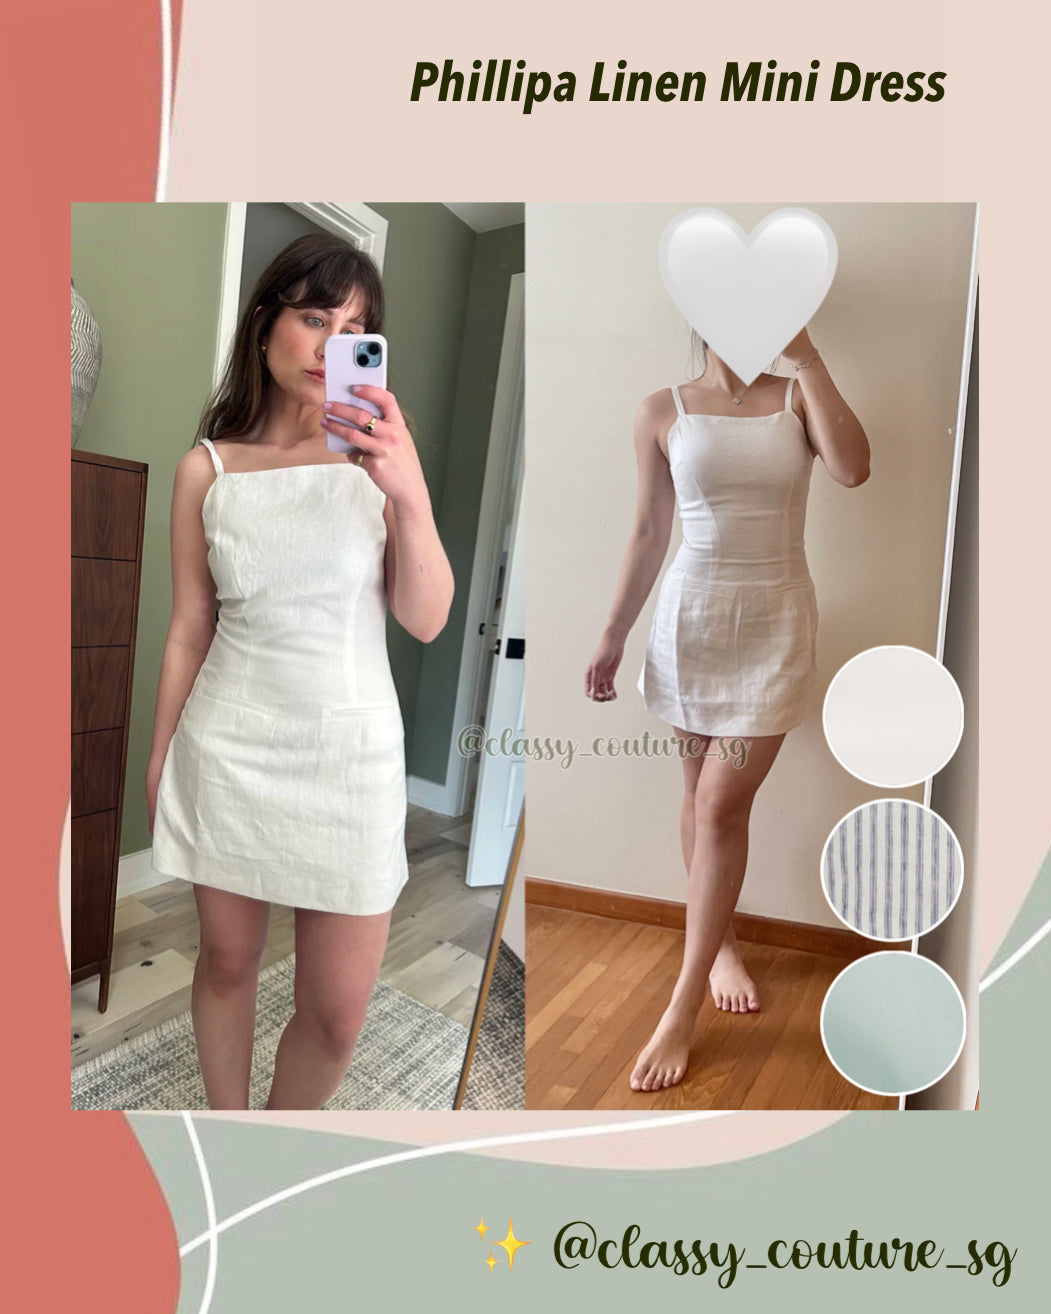 Phillipa Linen Mini Dress